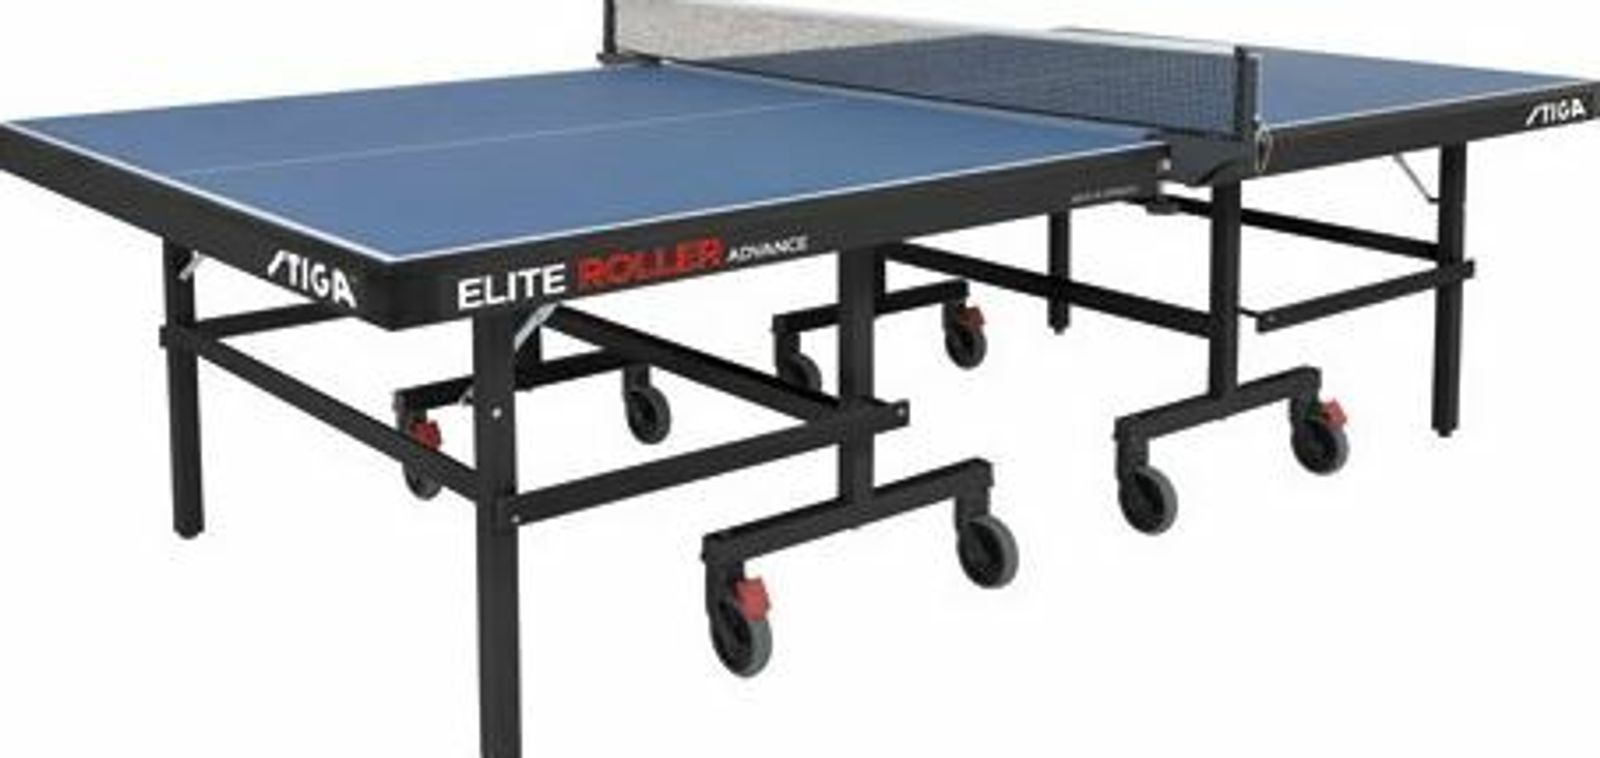 Теннисный стол STIGA Elite Roller Advance 22 мм (синий) фото №1